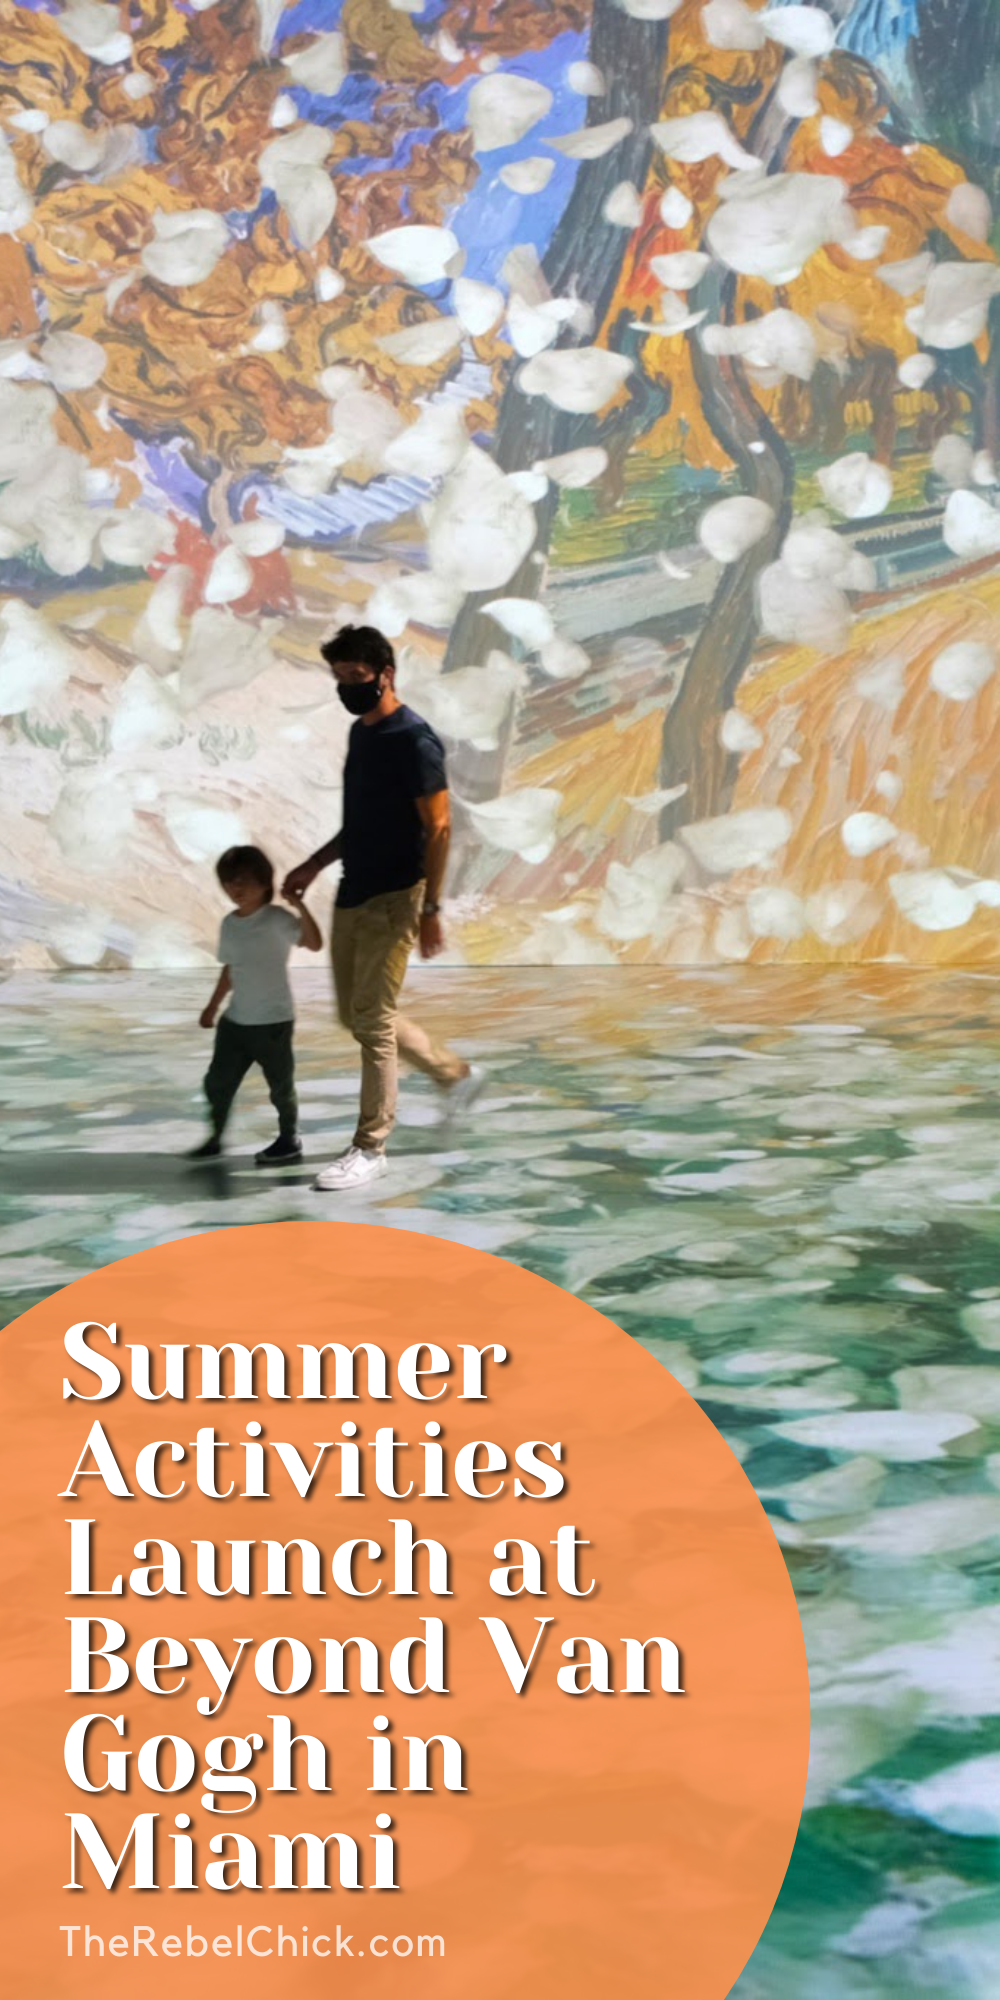 Summer Activities Launch at Beyond Van Gogh in Miami